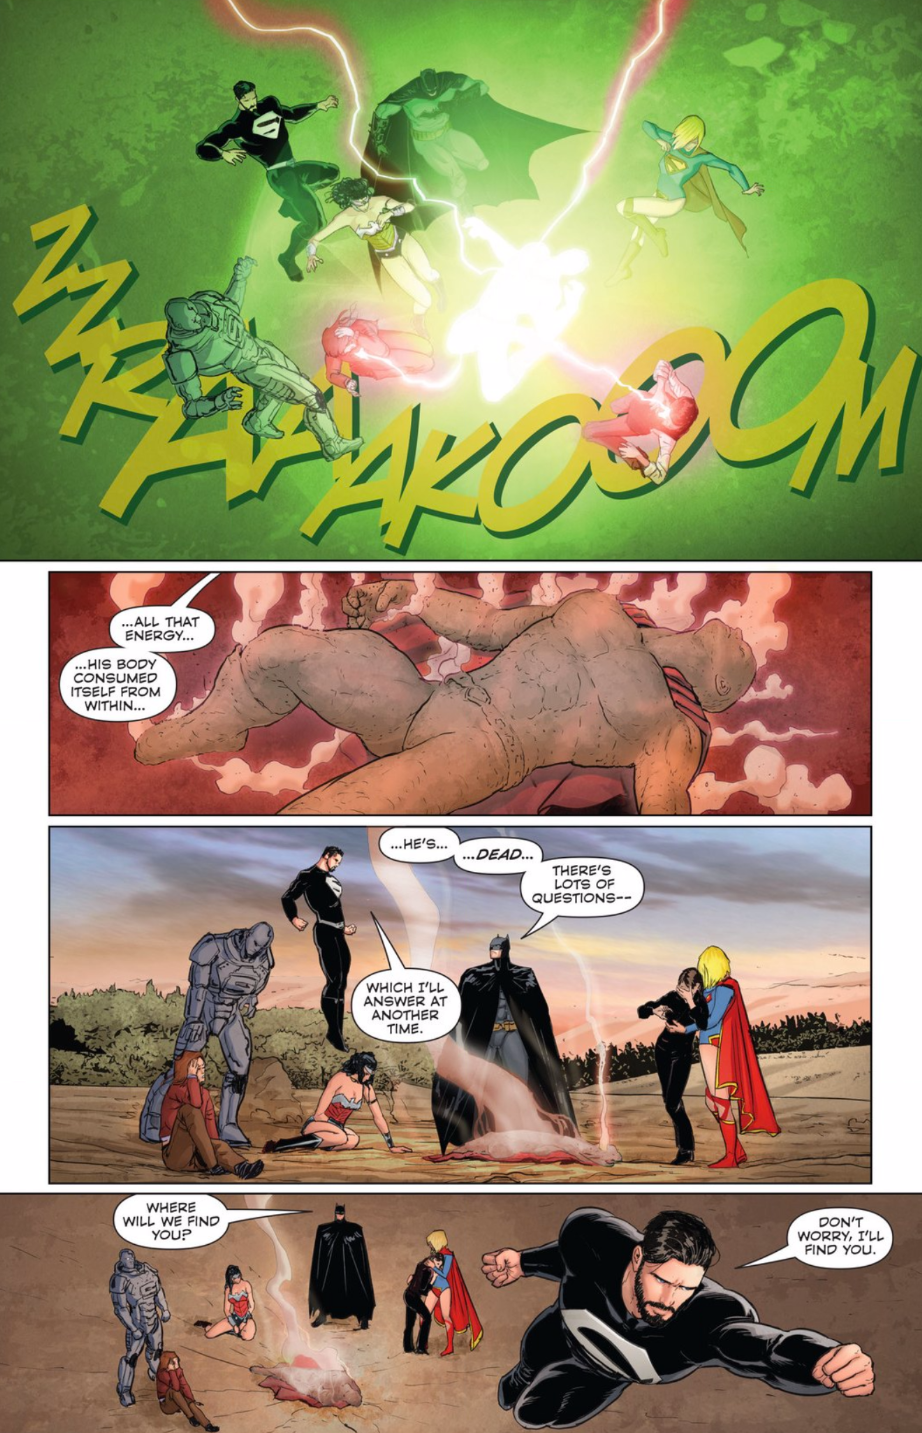 5 - [DC Comics] Superman: Discusión General - Página 10 Pmxp5wkhym7m6rtysmbn